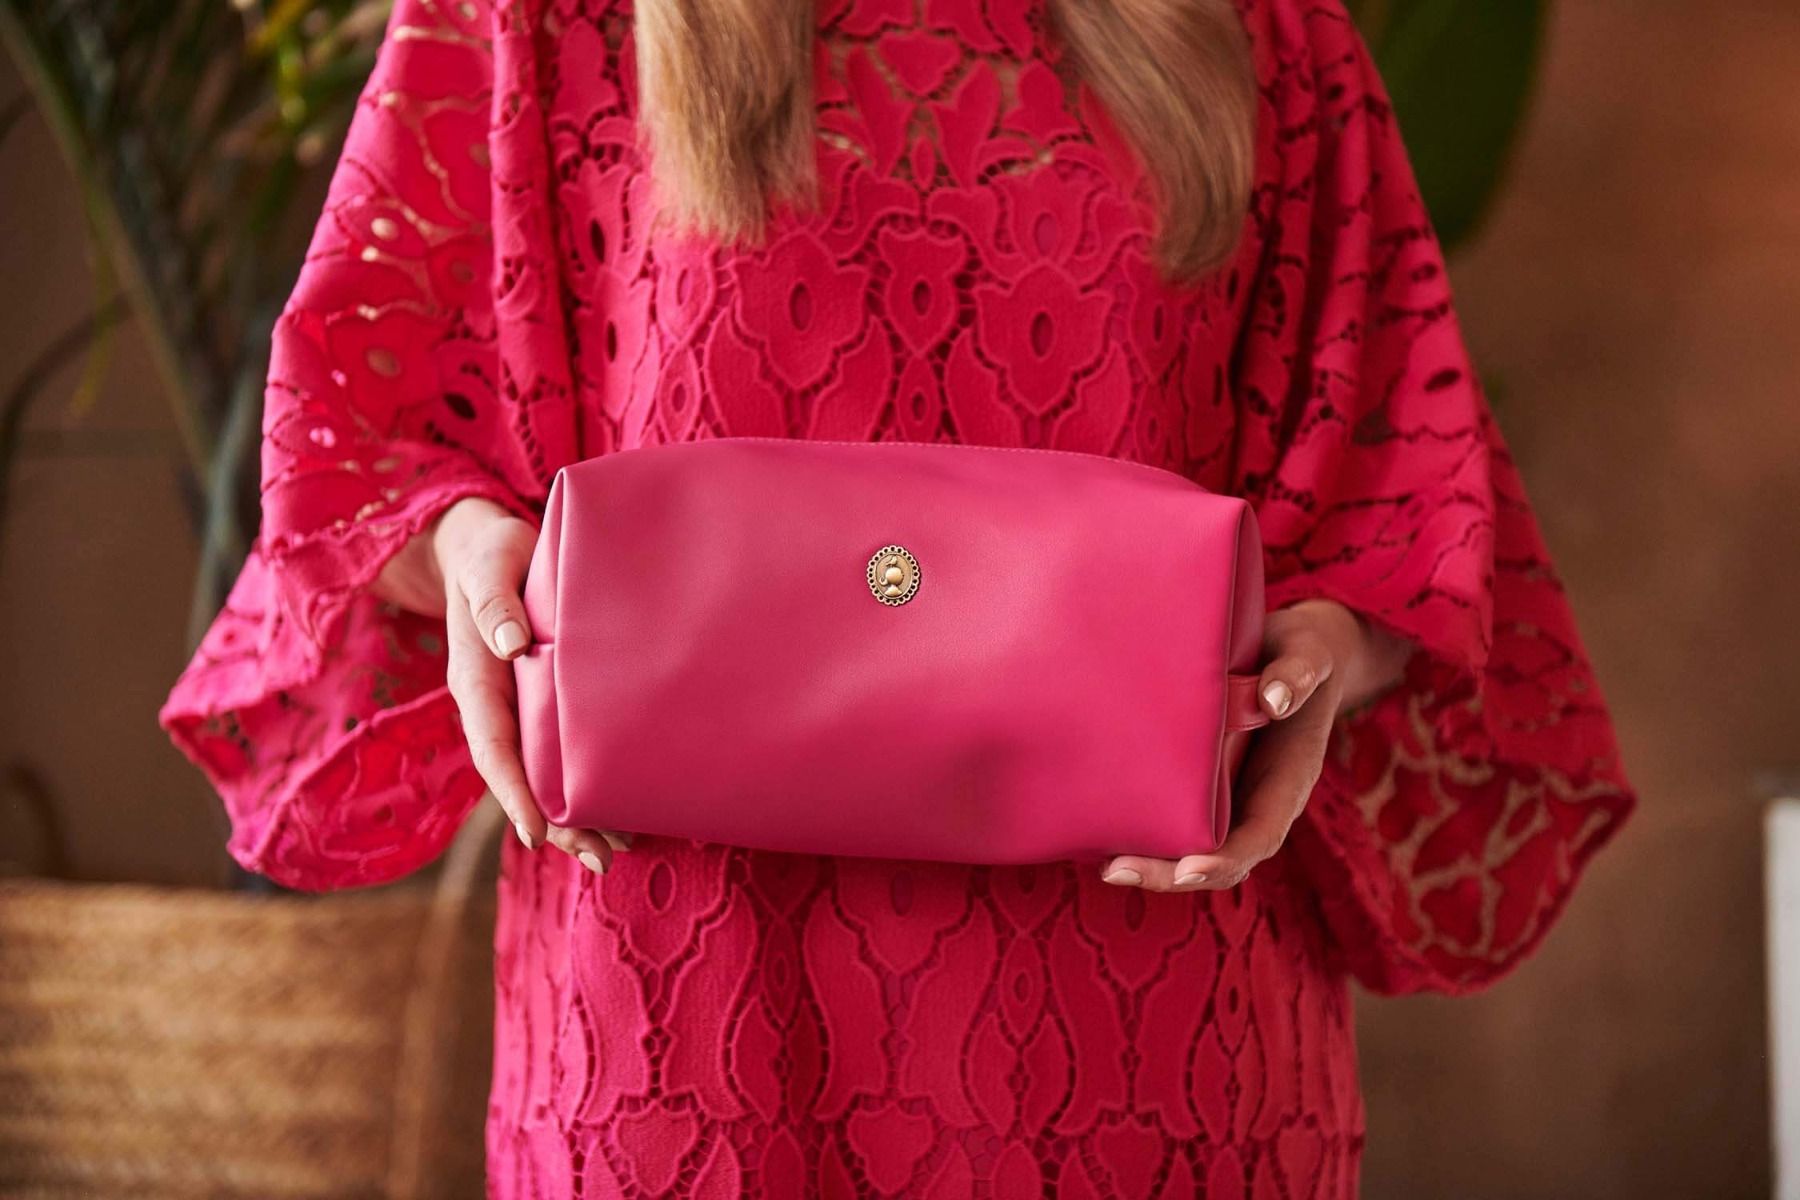 Cosmetic Bag Large Uni Pink